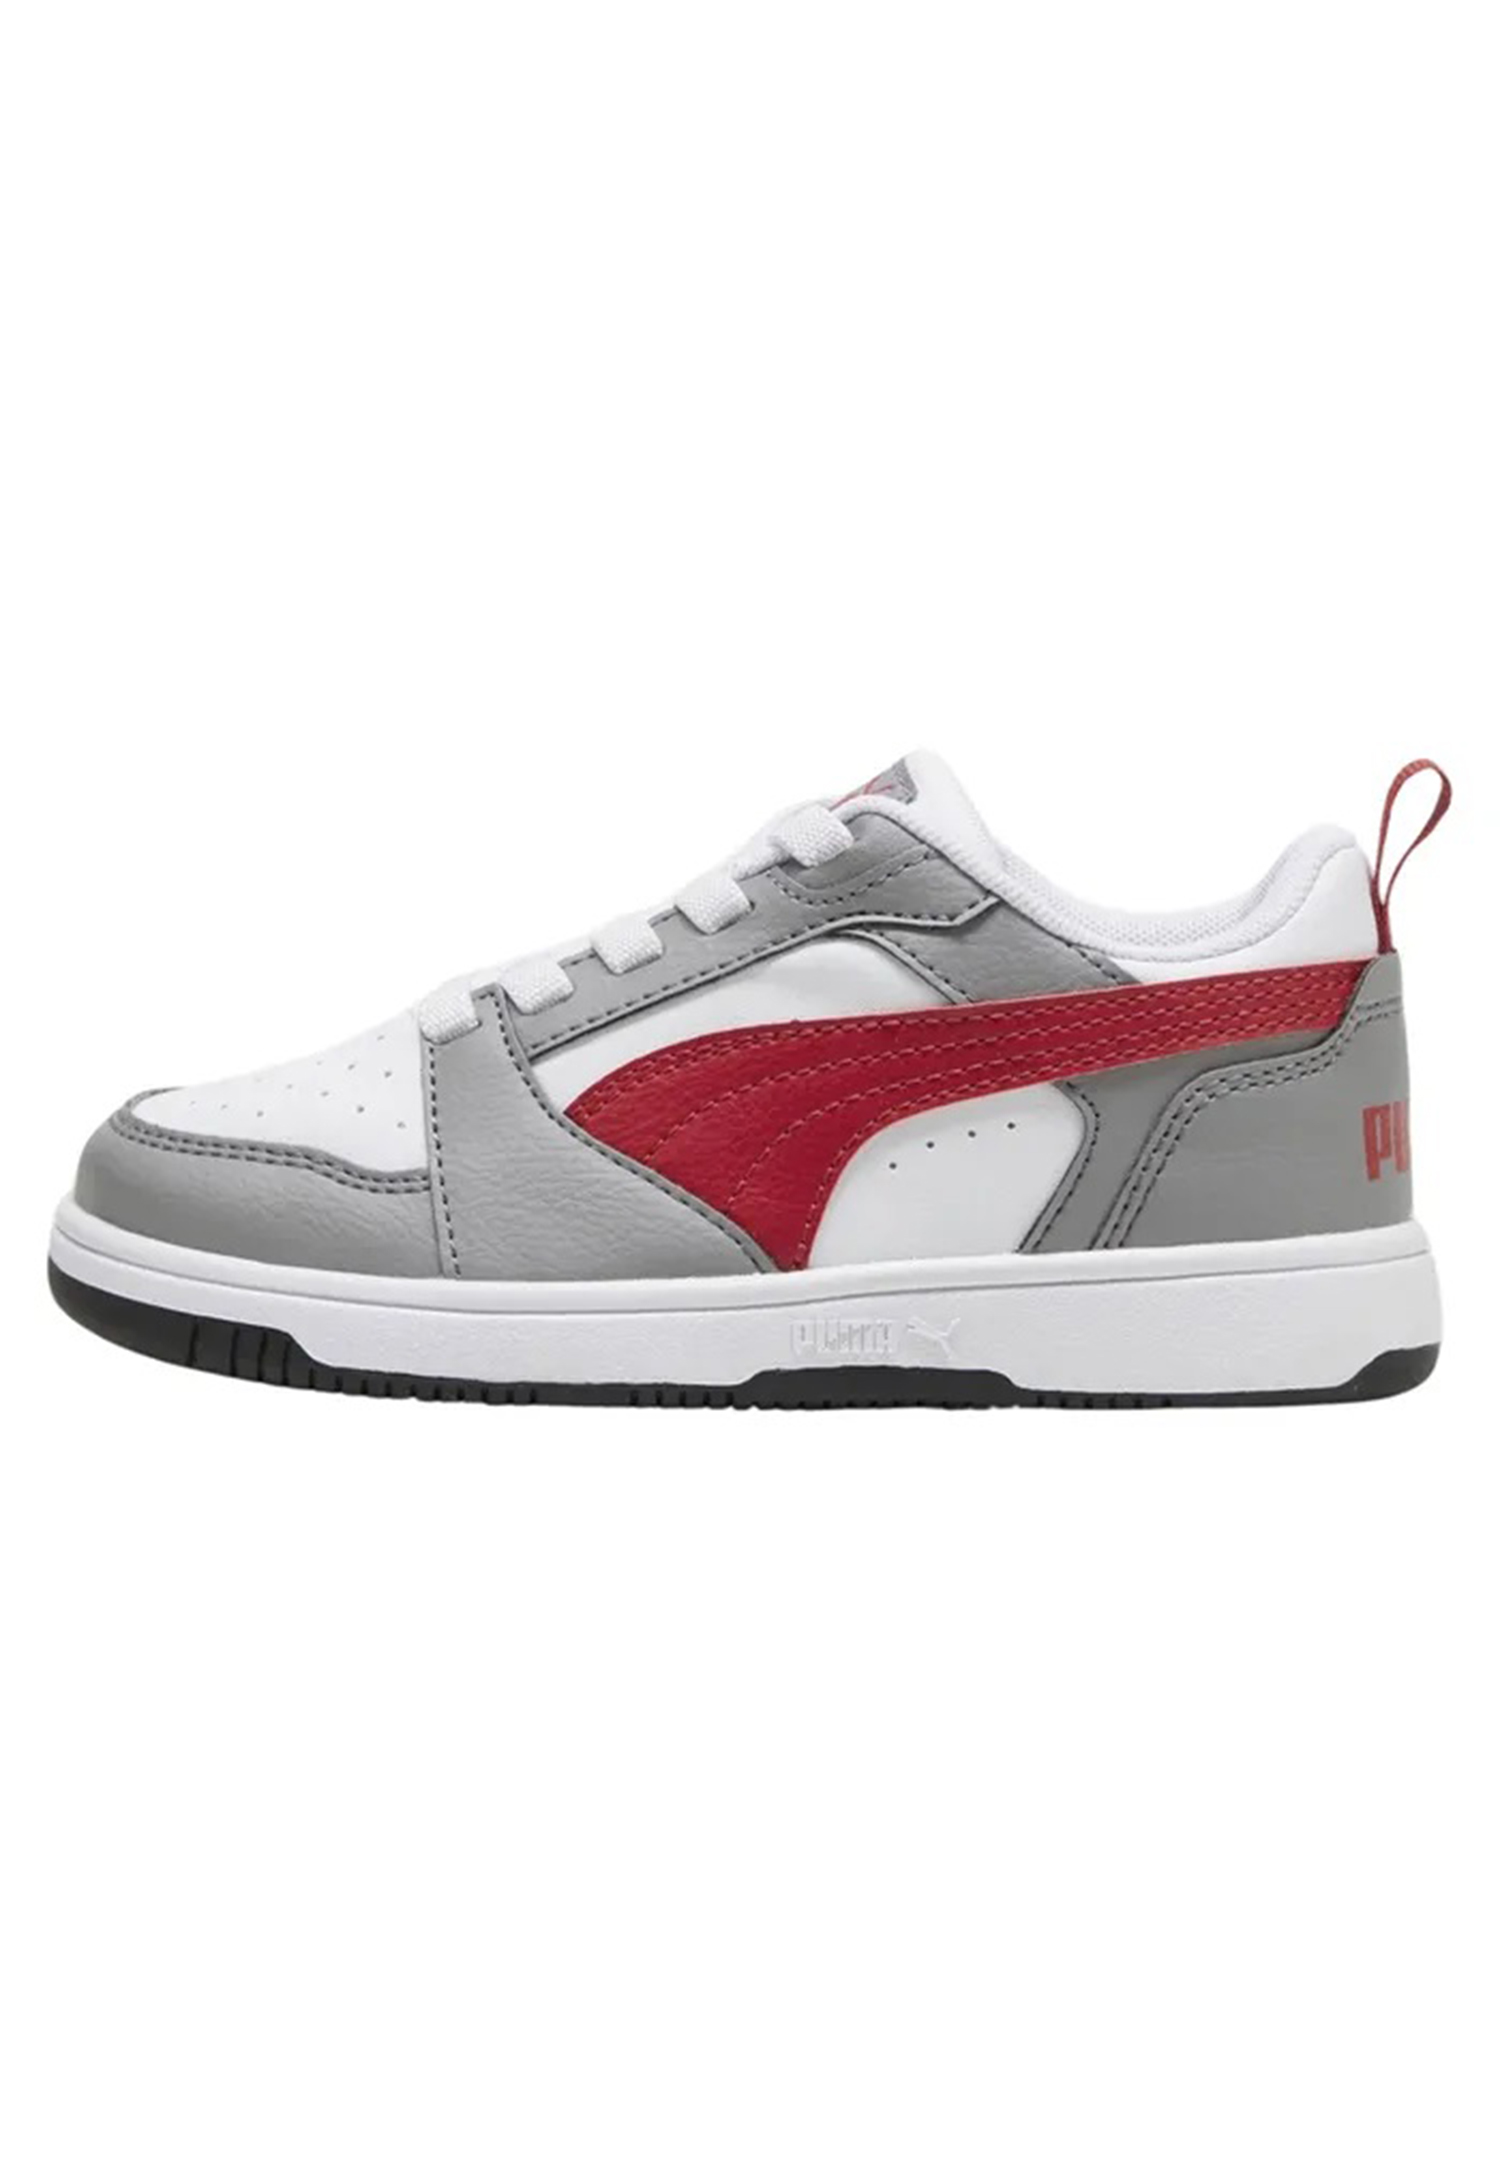 Puma Rebound V6 Lo AC PS Unisex Kinder Sneaker 396742 09 weiß/grau/rot 